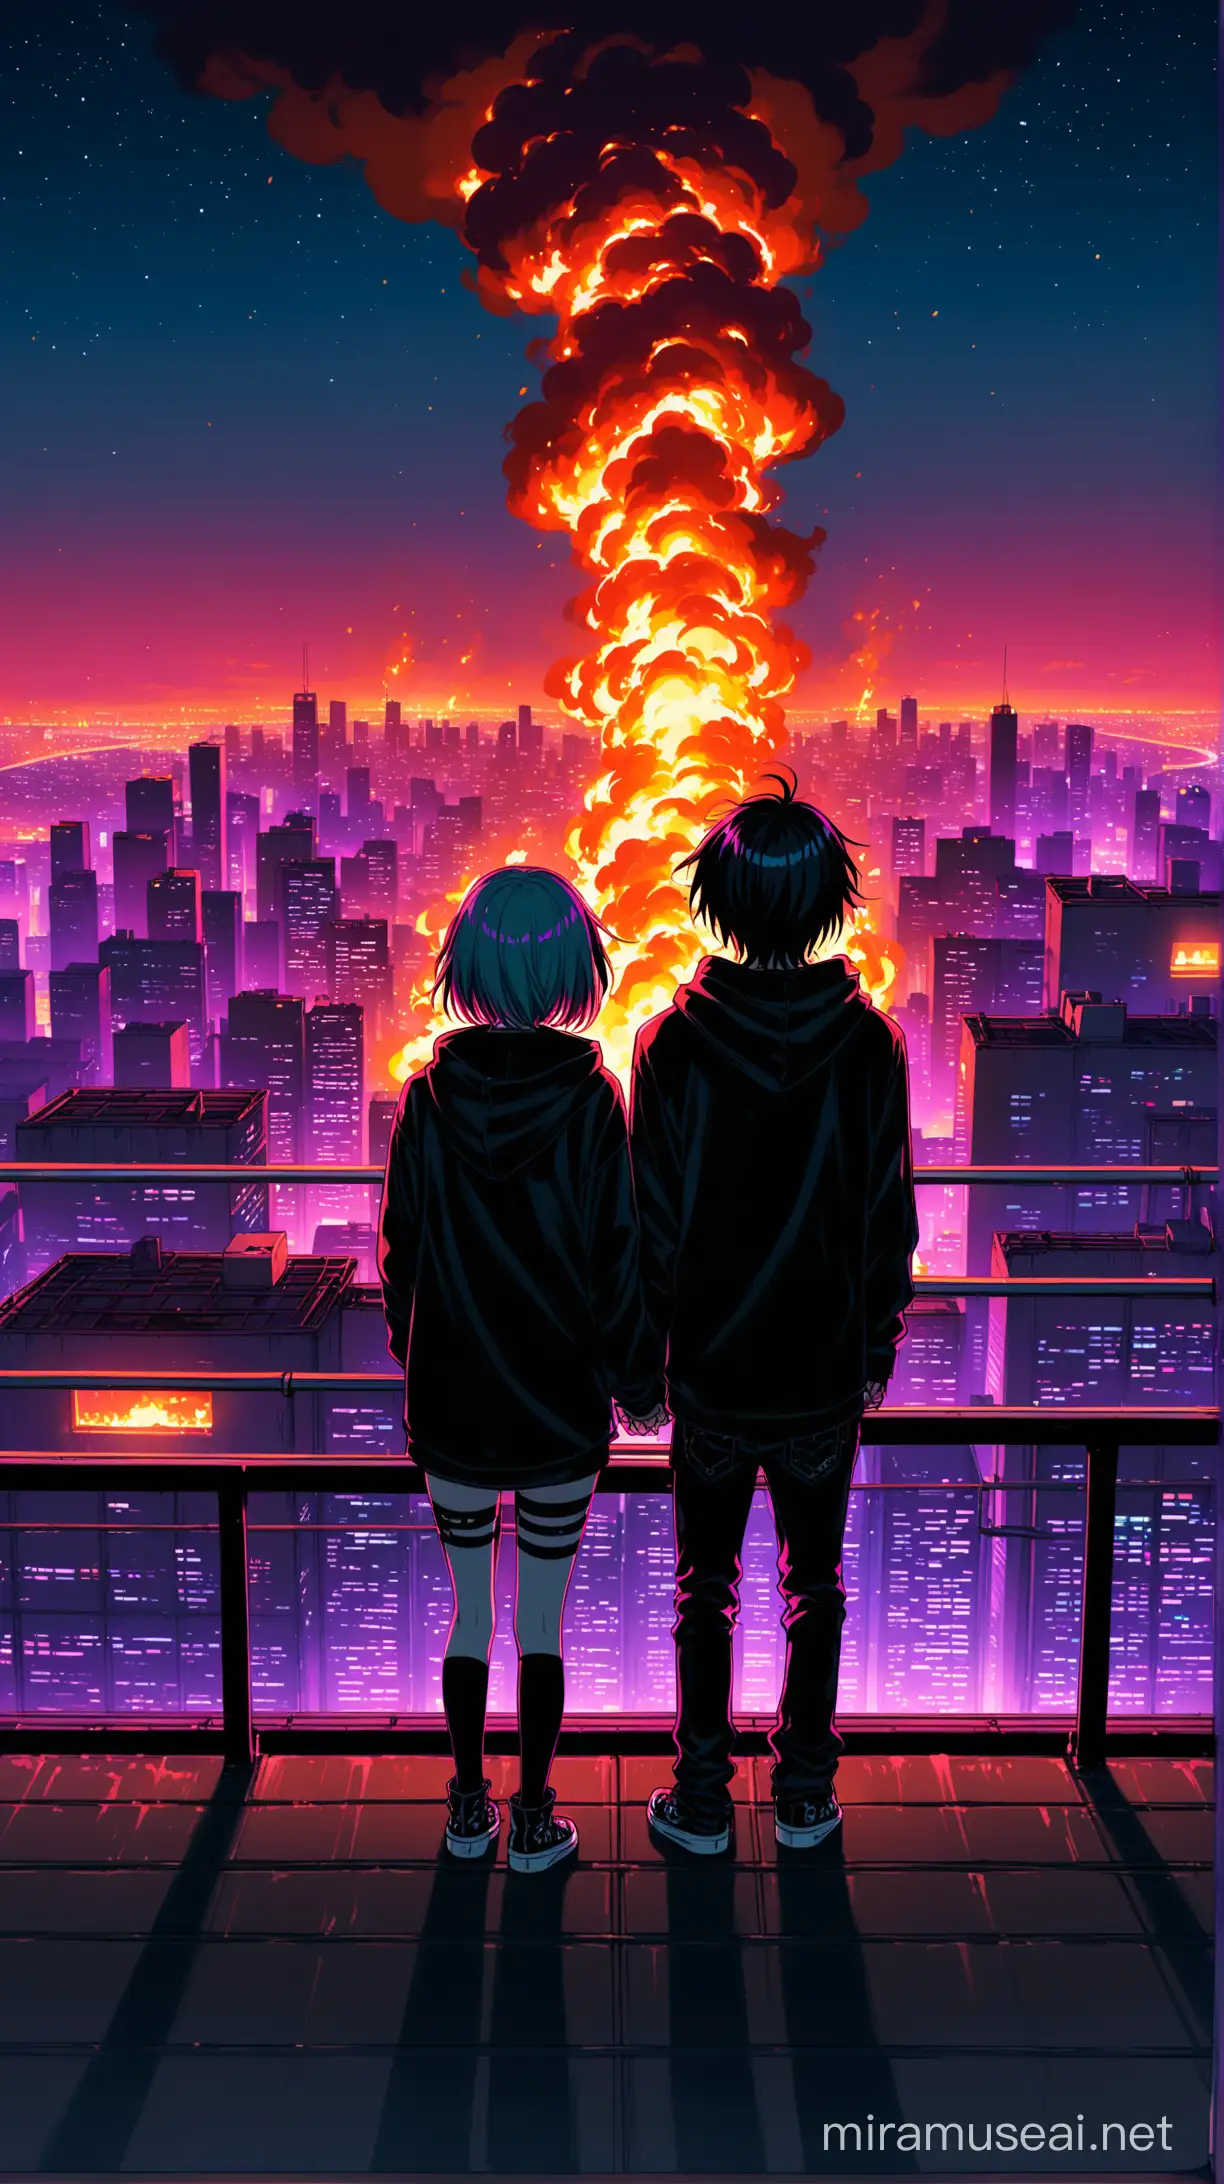 Emo Teenage Couple Standing on Rooftop Overlooking Burning Neon City at Night